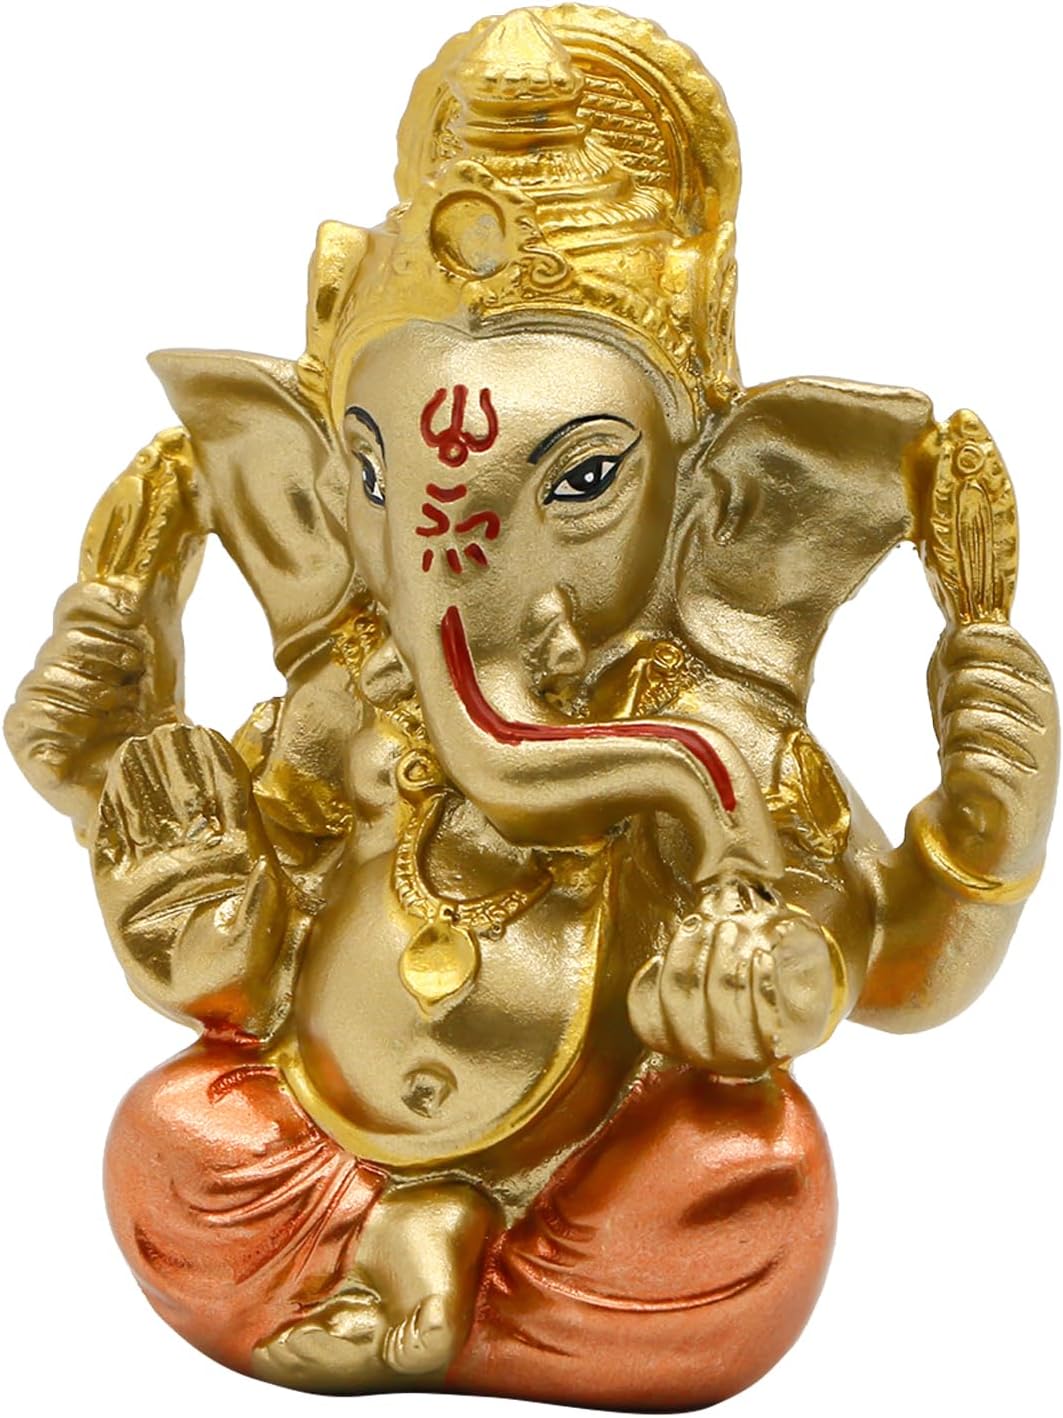 alikiki Hindu God Lord Ganesha Staue - India God Ganesh Idol for Car Dashboard Decor Birthday Gifts for Indian Man Women Home Mandir Temple Pooja Item Diwali Puja Gifts Yoga Room Altar Decor